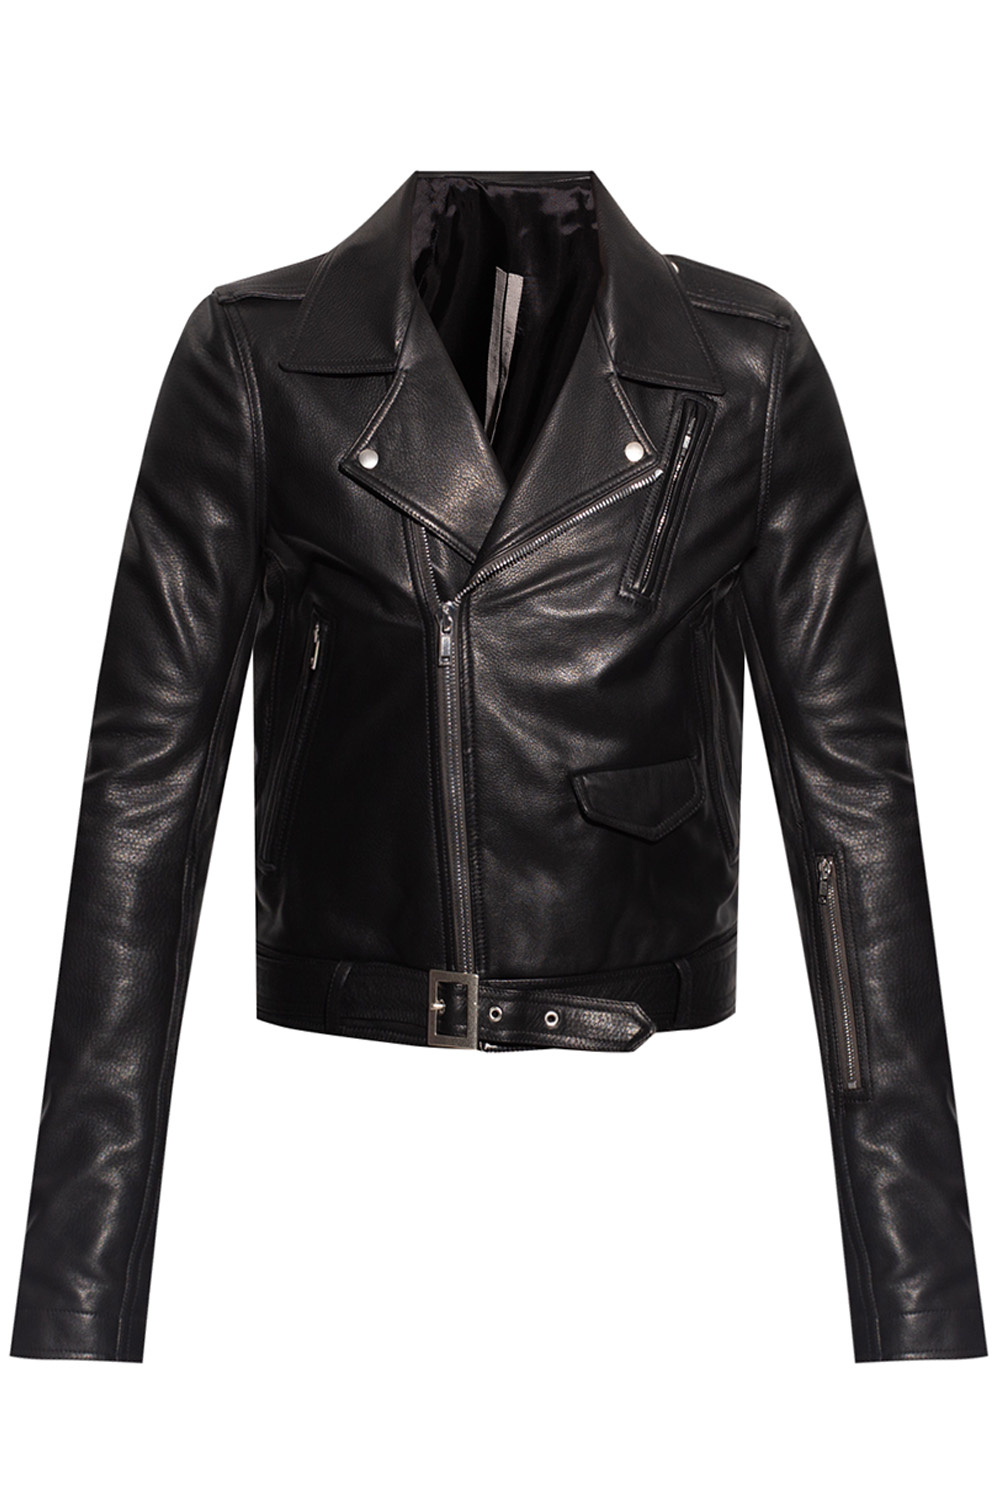 Rick Owens Leather biker jacket | Men's Clothing | Vitkac